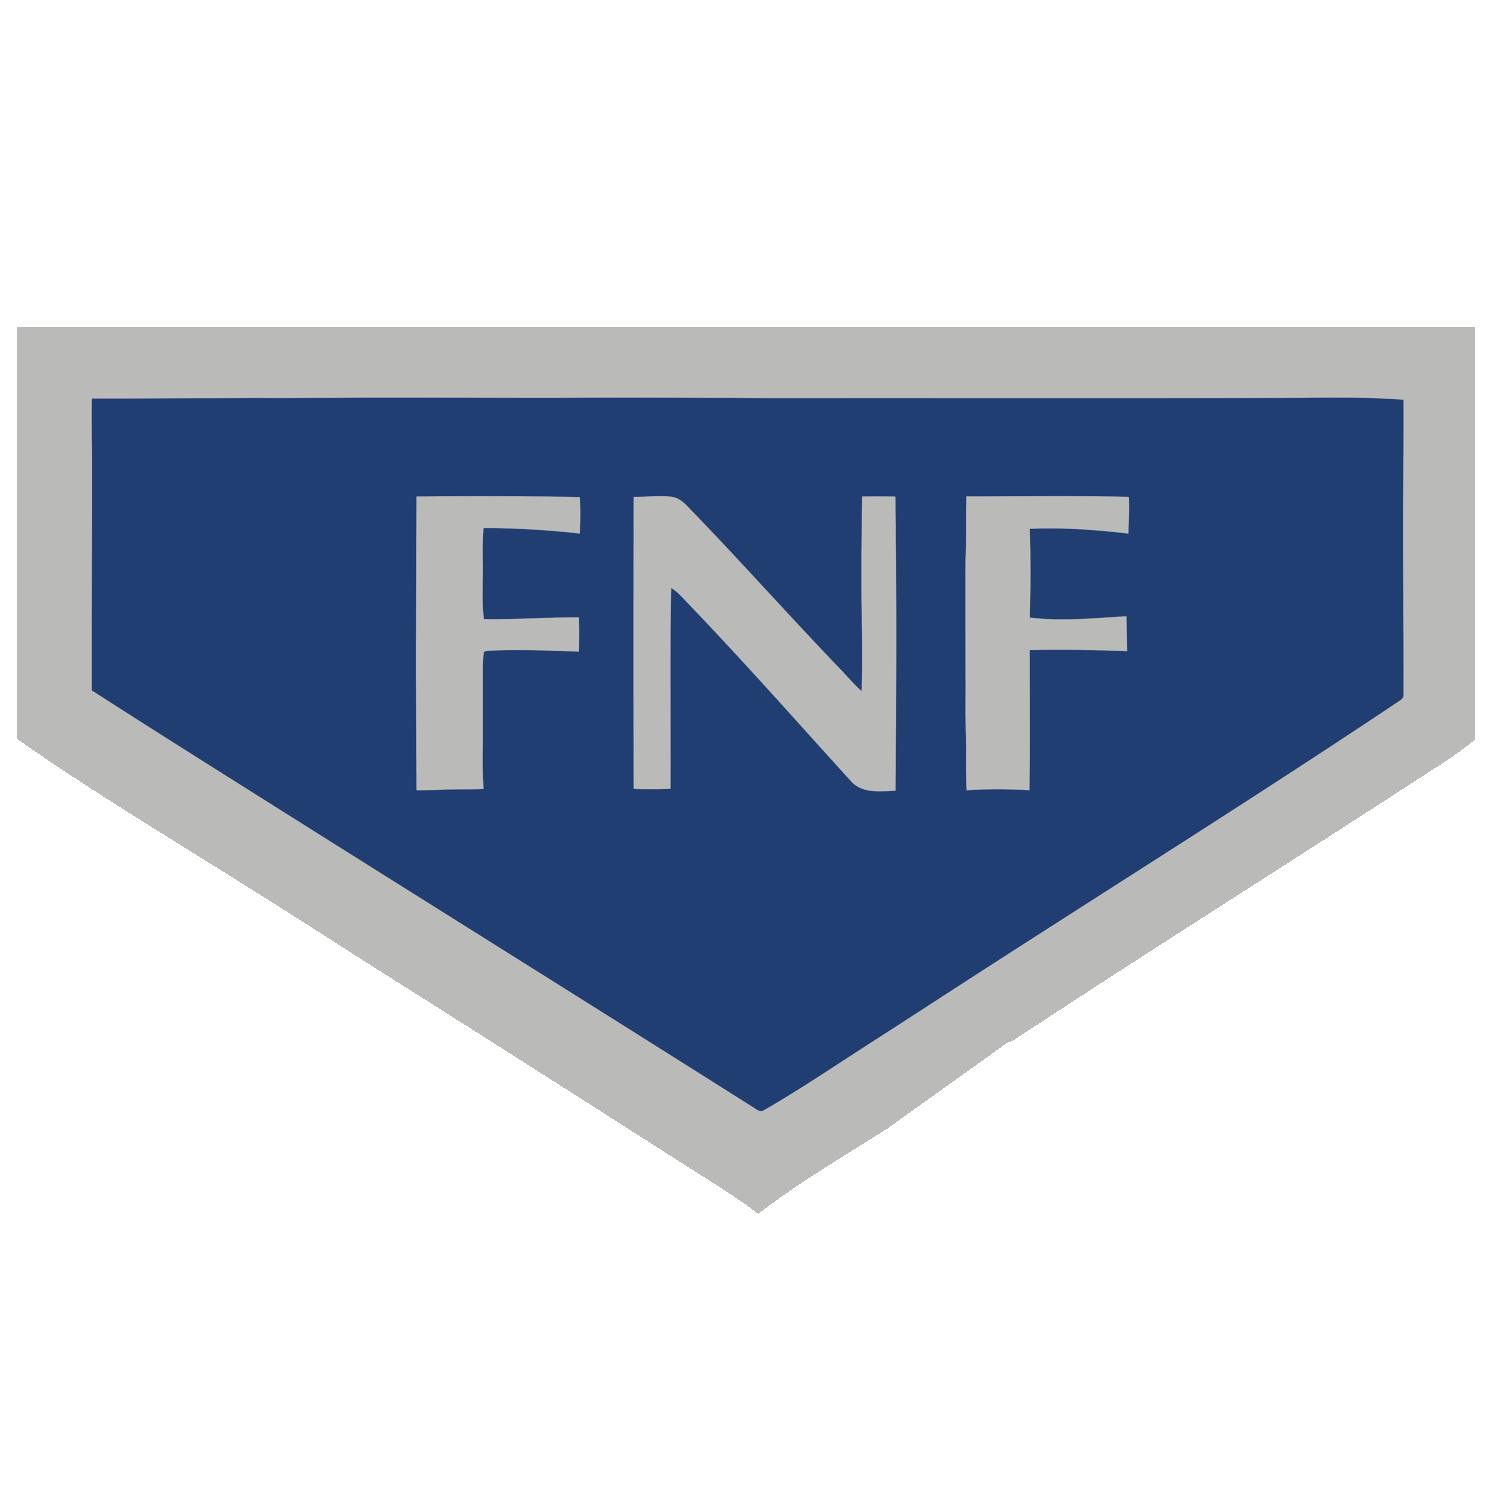 Fnf icon. FNF. FNF значки. ФНФ лого. FNF картинки.